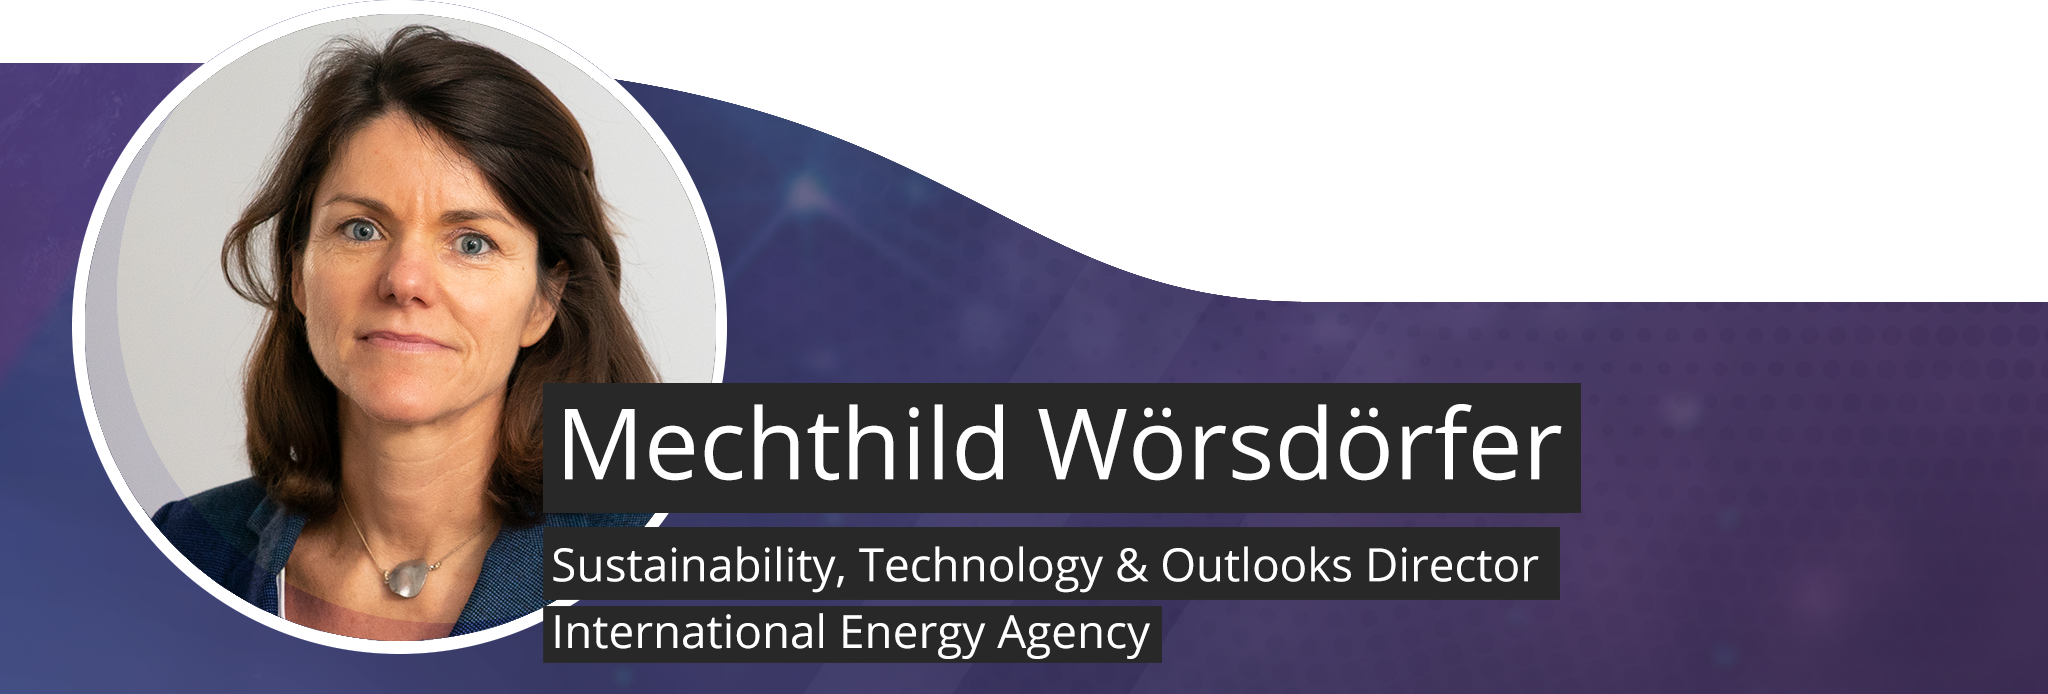 Mechthild Wörsdörfer, Director, Sustainability, Technology & Outlooks, International Energy Agency